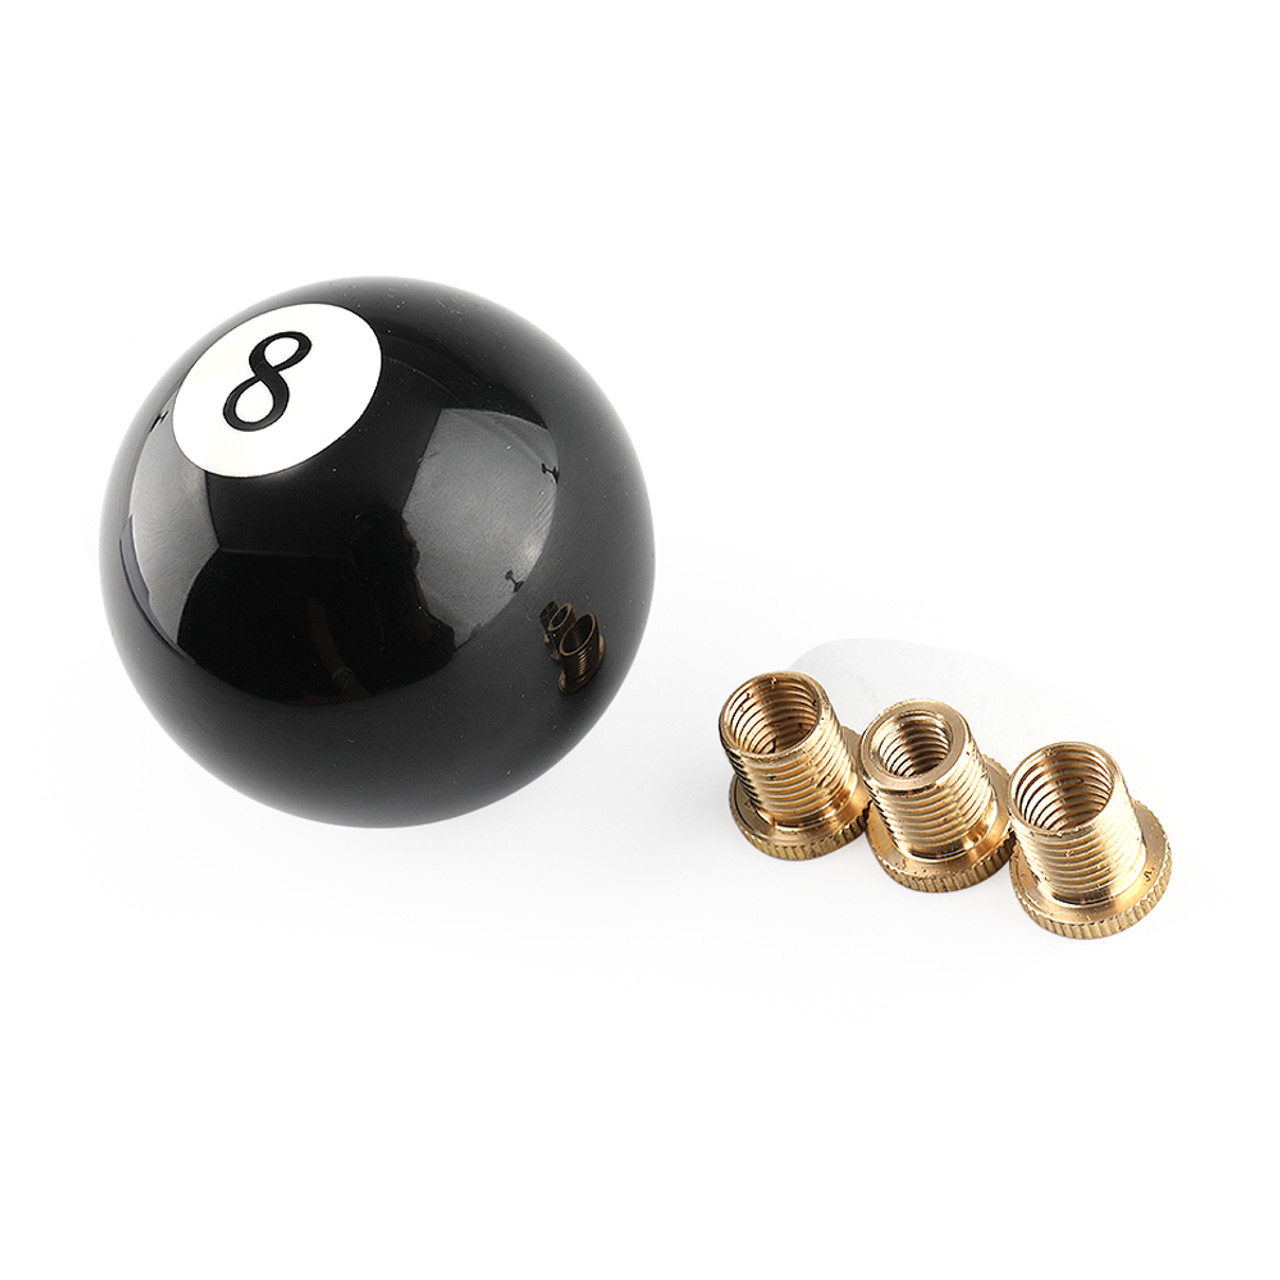 Universal No.8 Billiard Ball Gear Shifter Black Round Shift Knob w/ 3 Adapters